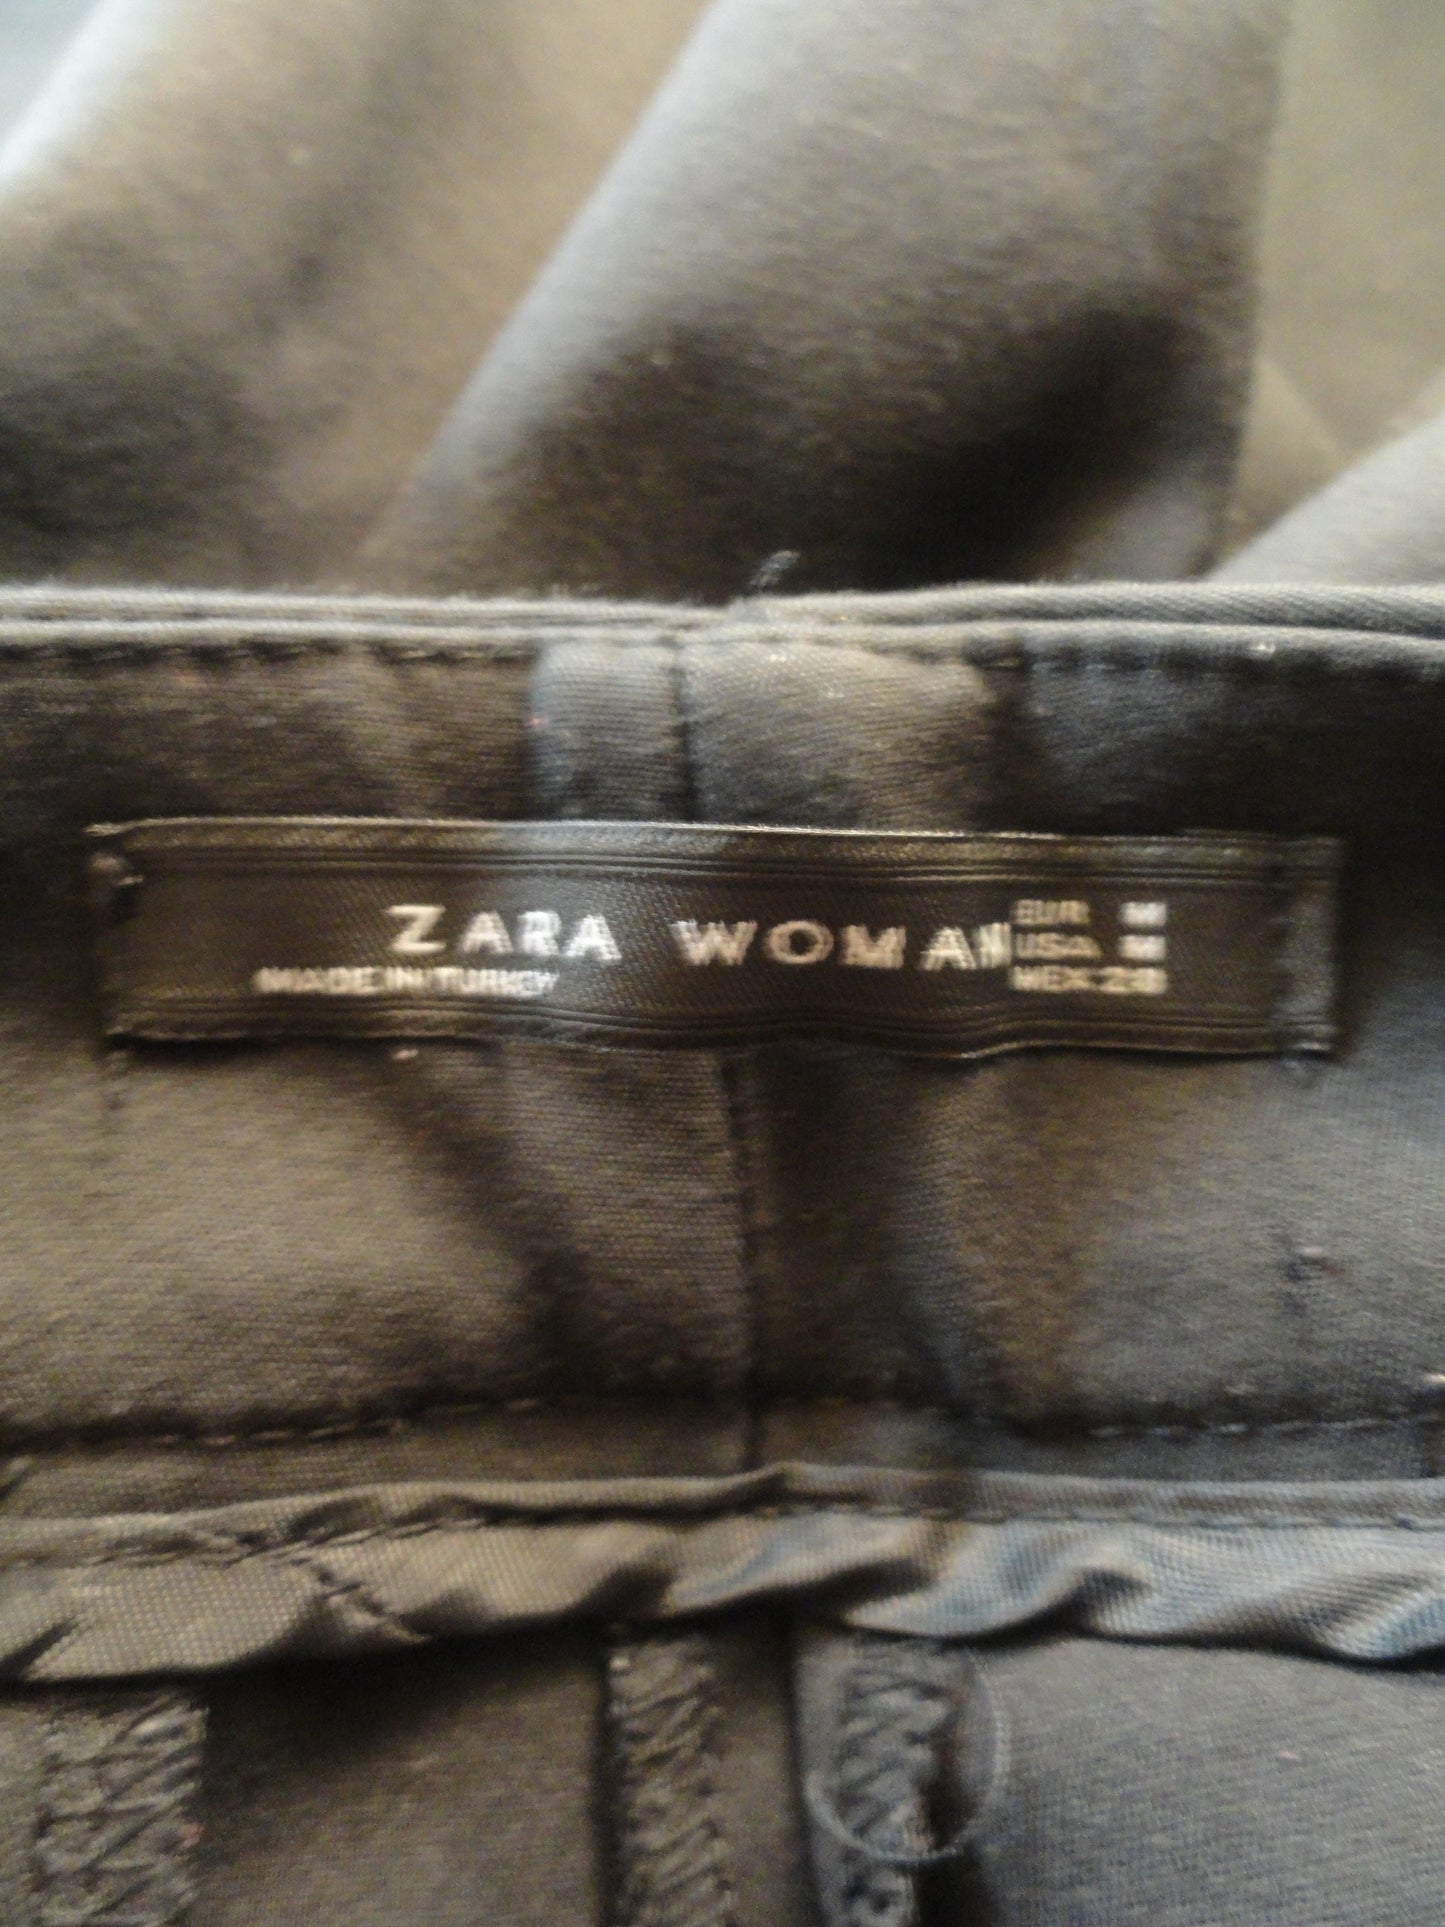 Zara Woman Black Capri Length Pants with Metal Stud Waist Band Size M SKU 000119